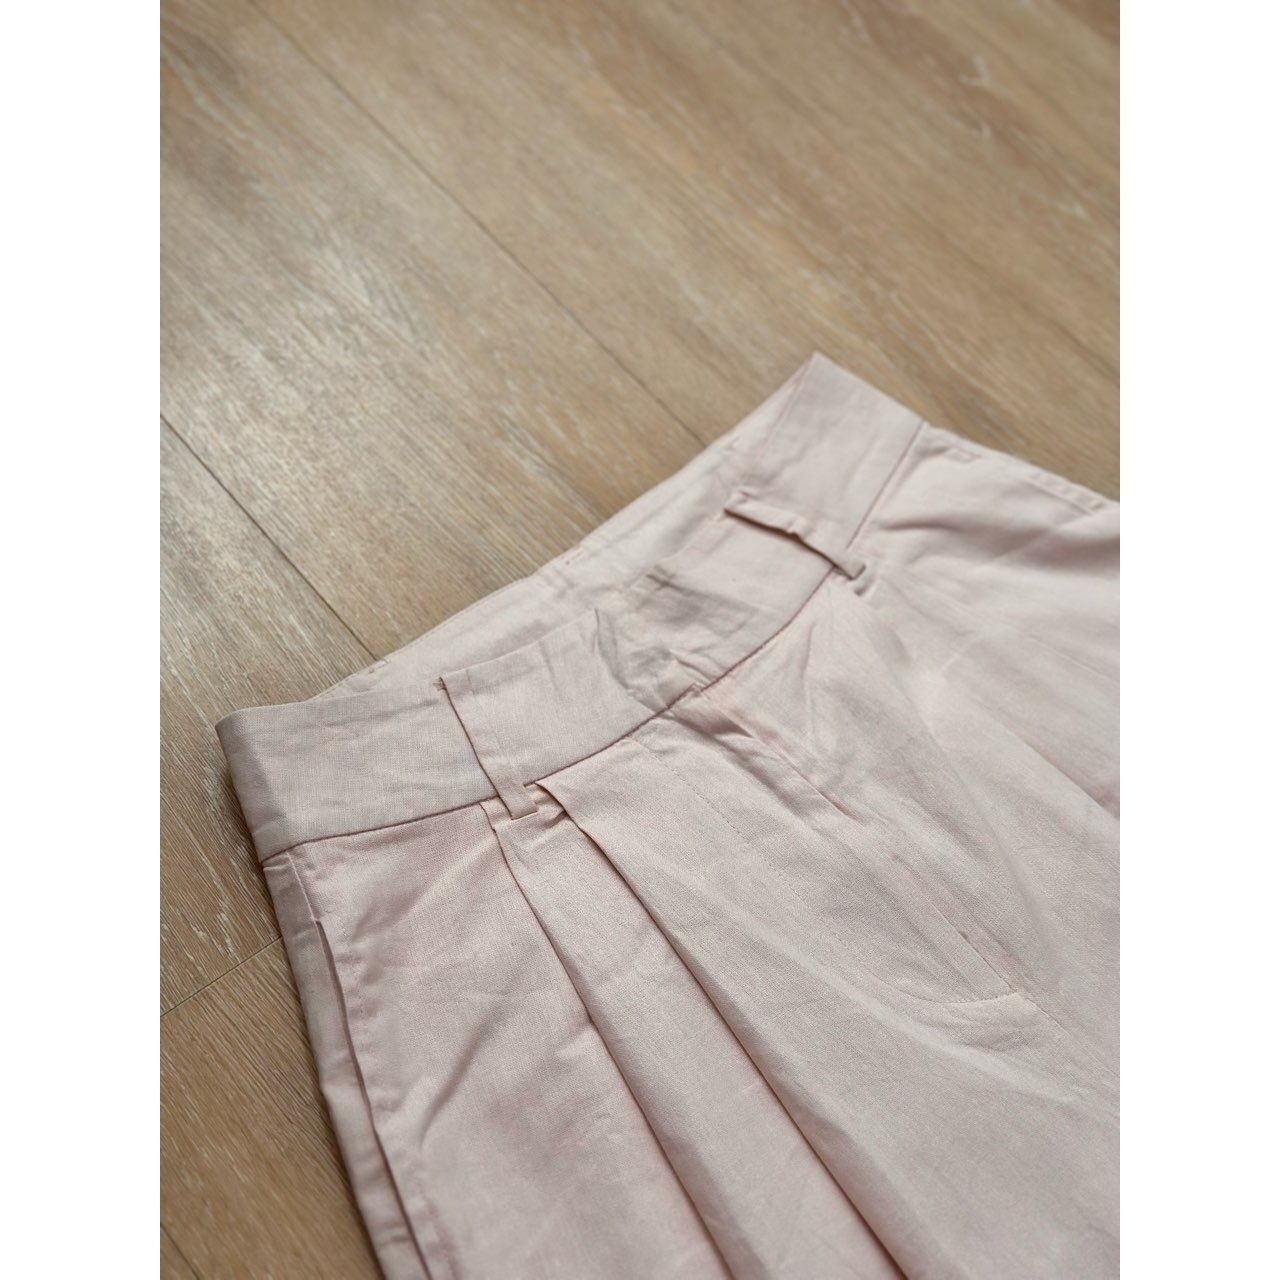 Cotton Ink Soft Pink Linen Long Pants